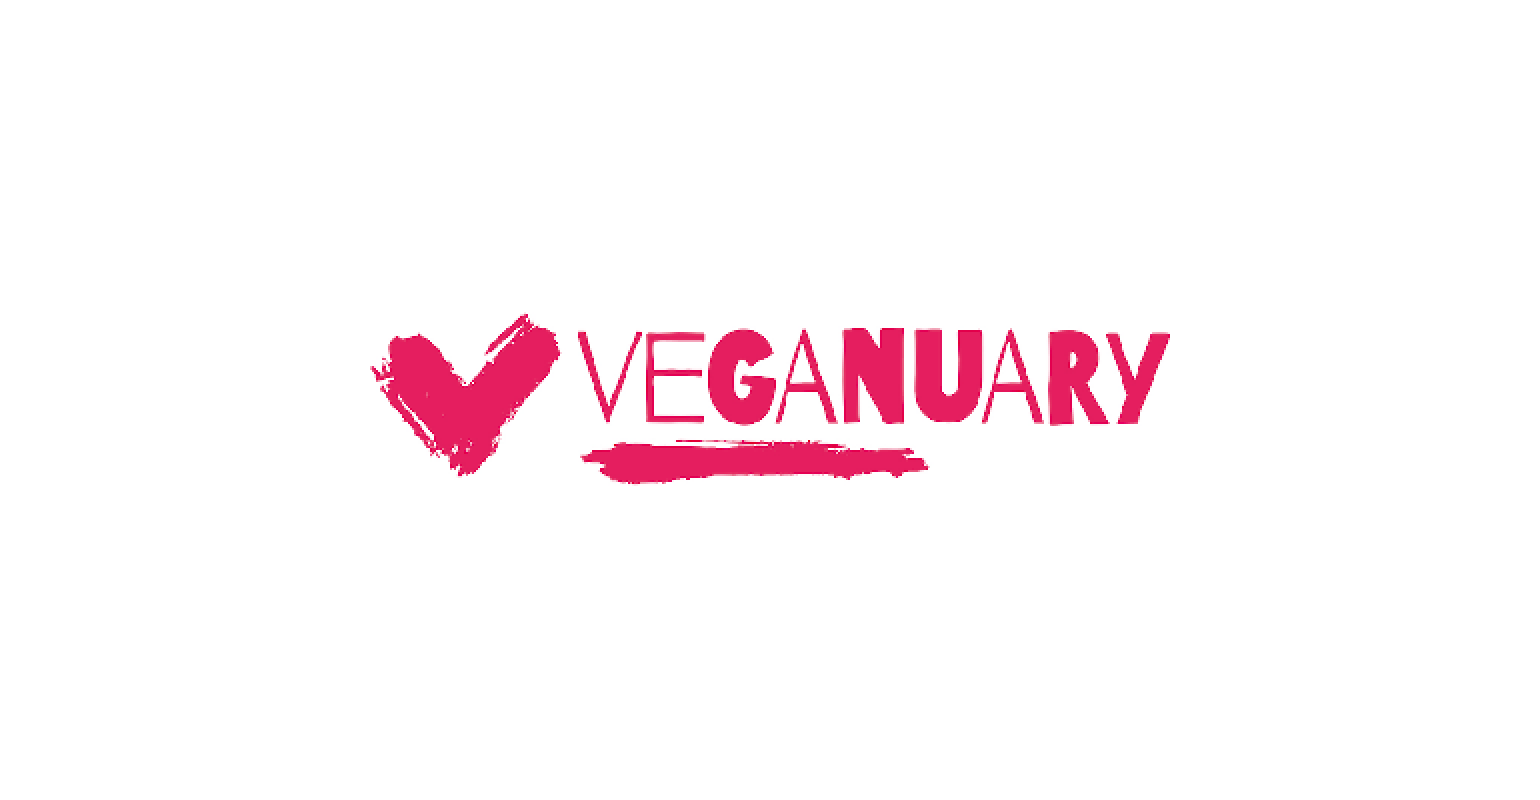 Vegan January